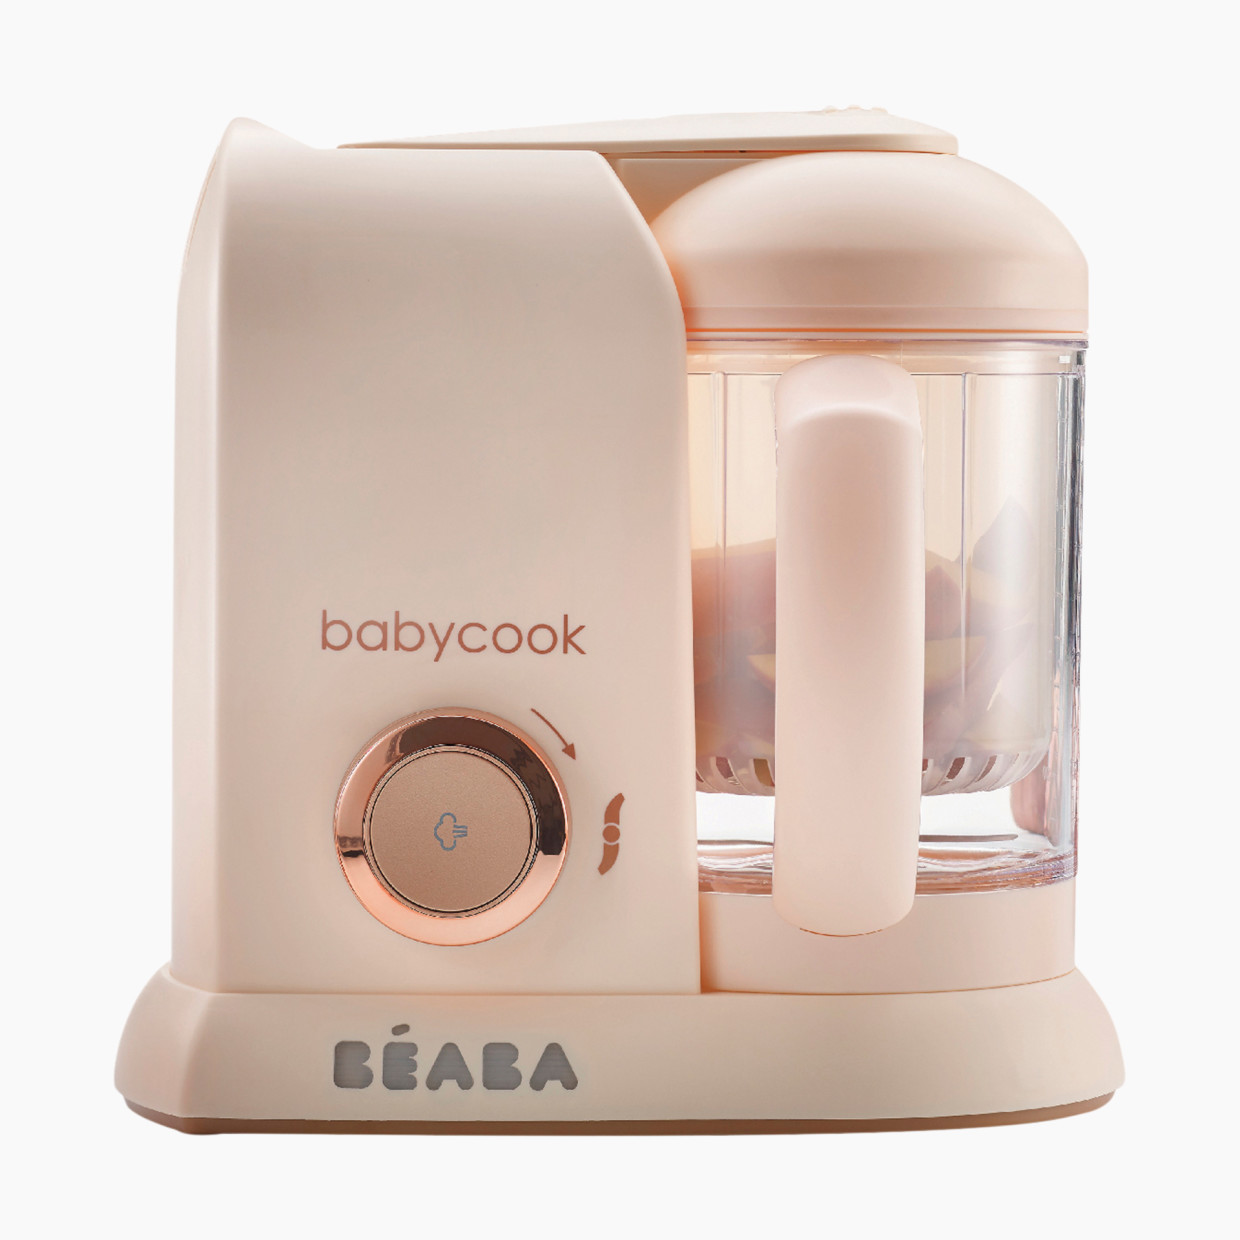 Beaba Babycook Solo Baby Food Maker - Rose Gold.